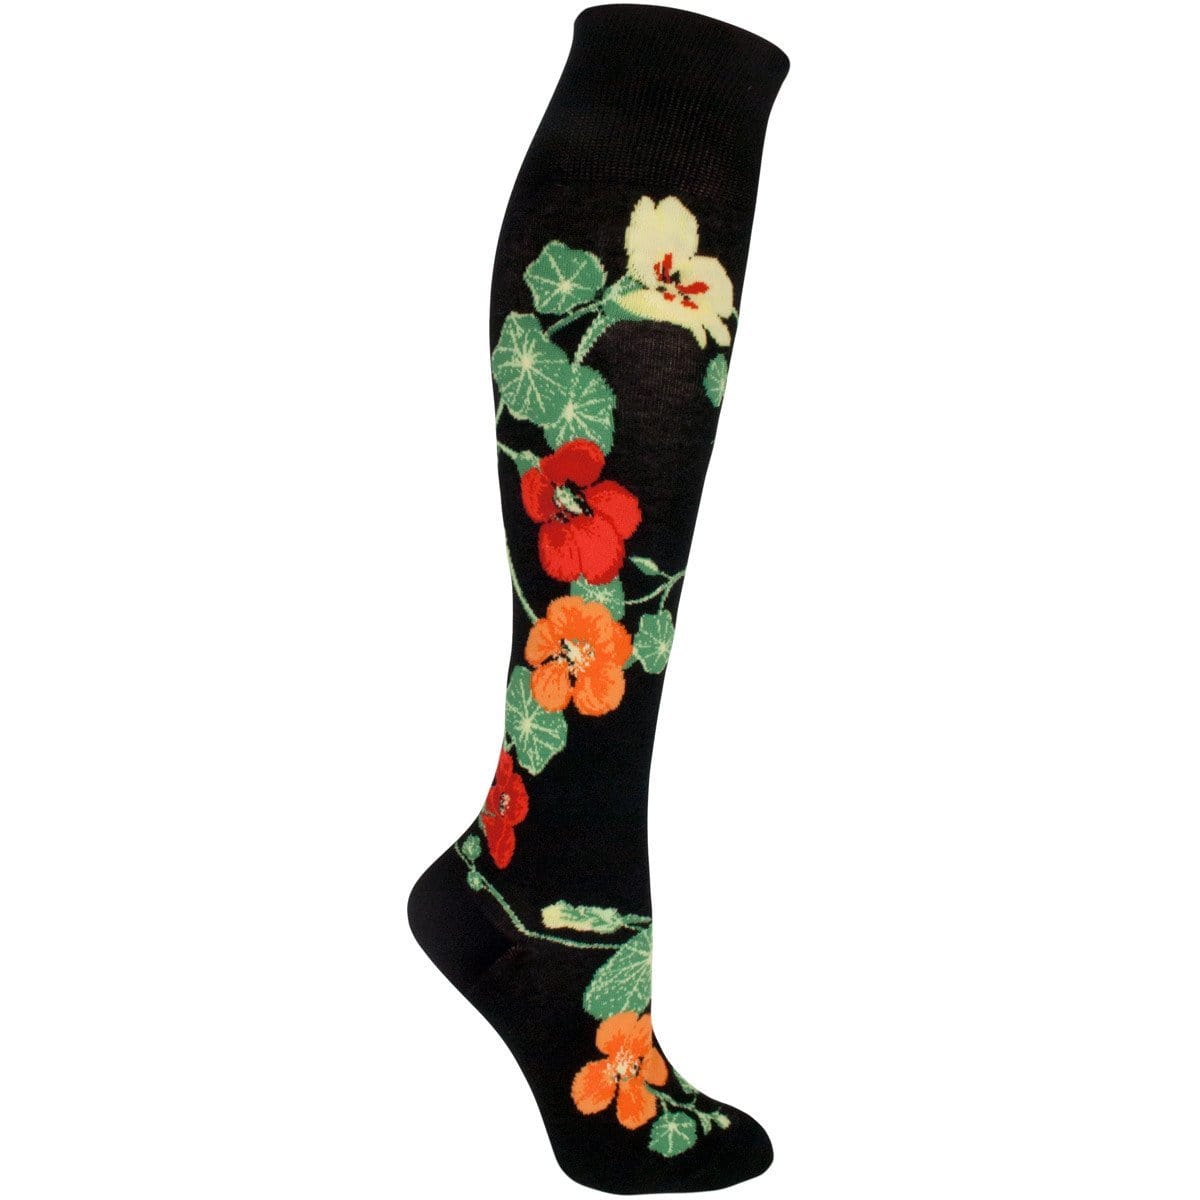 Nasturtiums Socks Women's Knee High Sock black